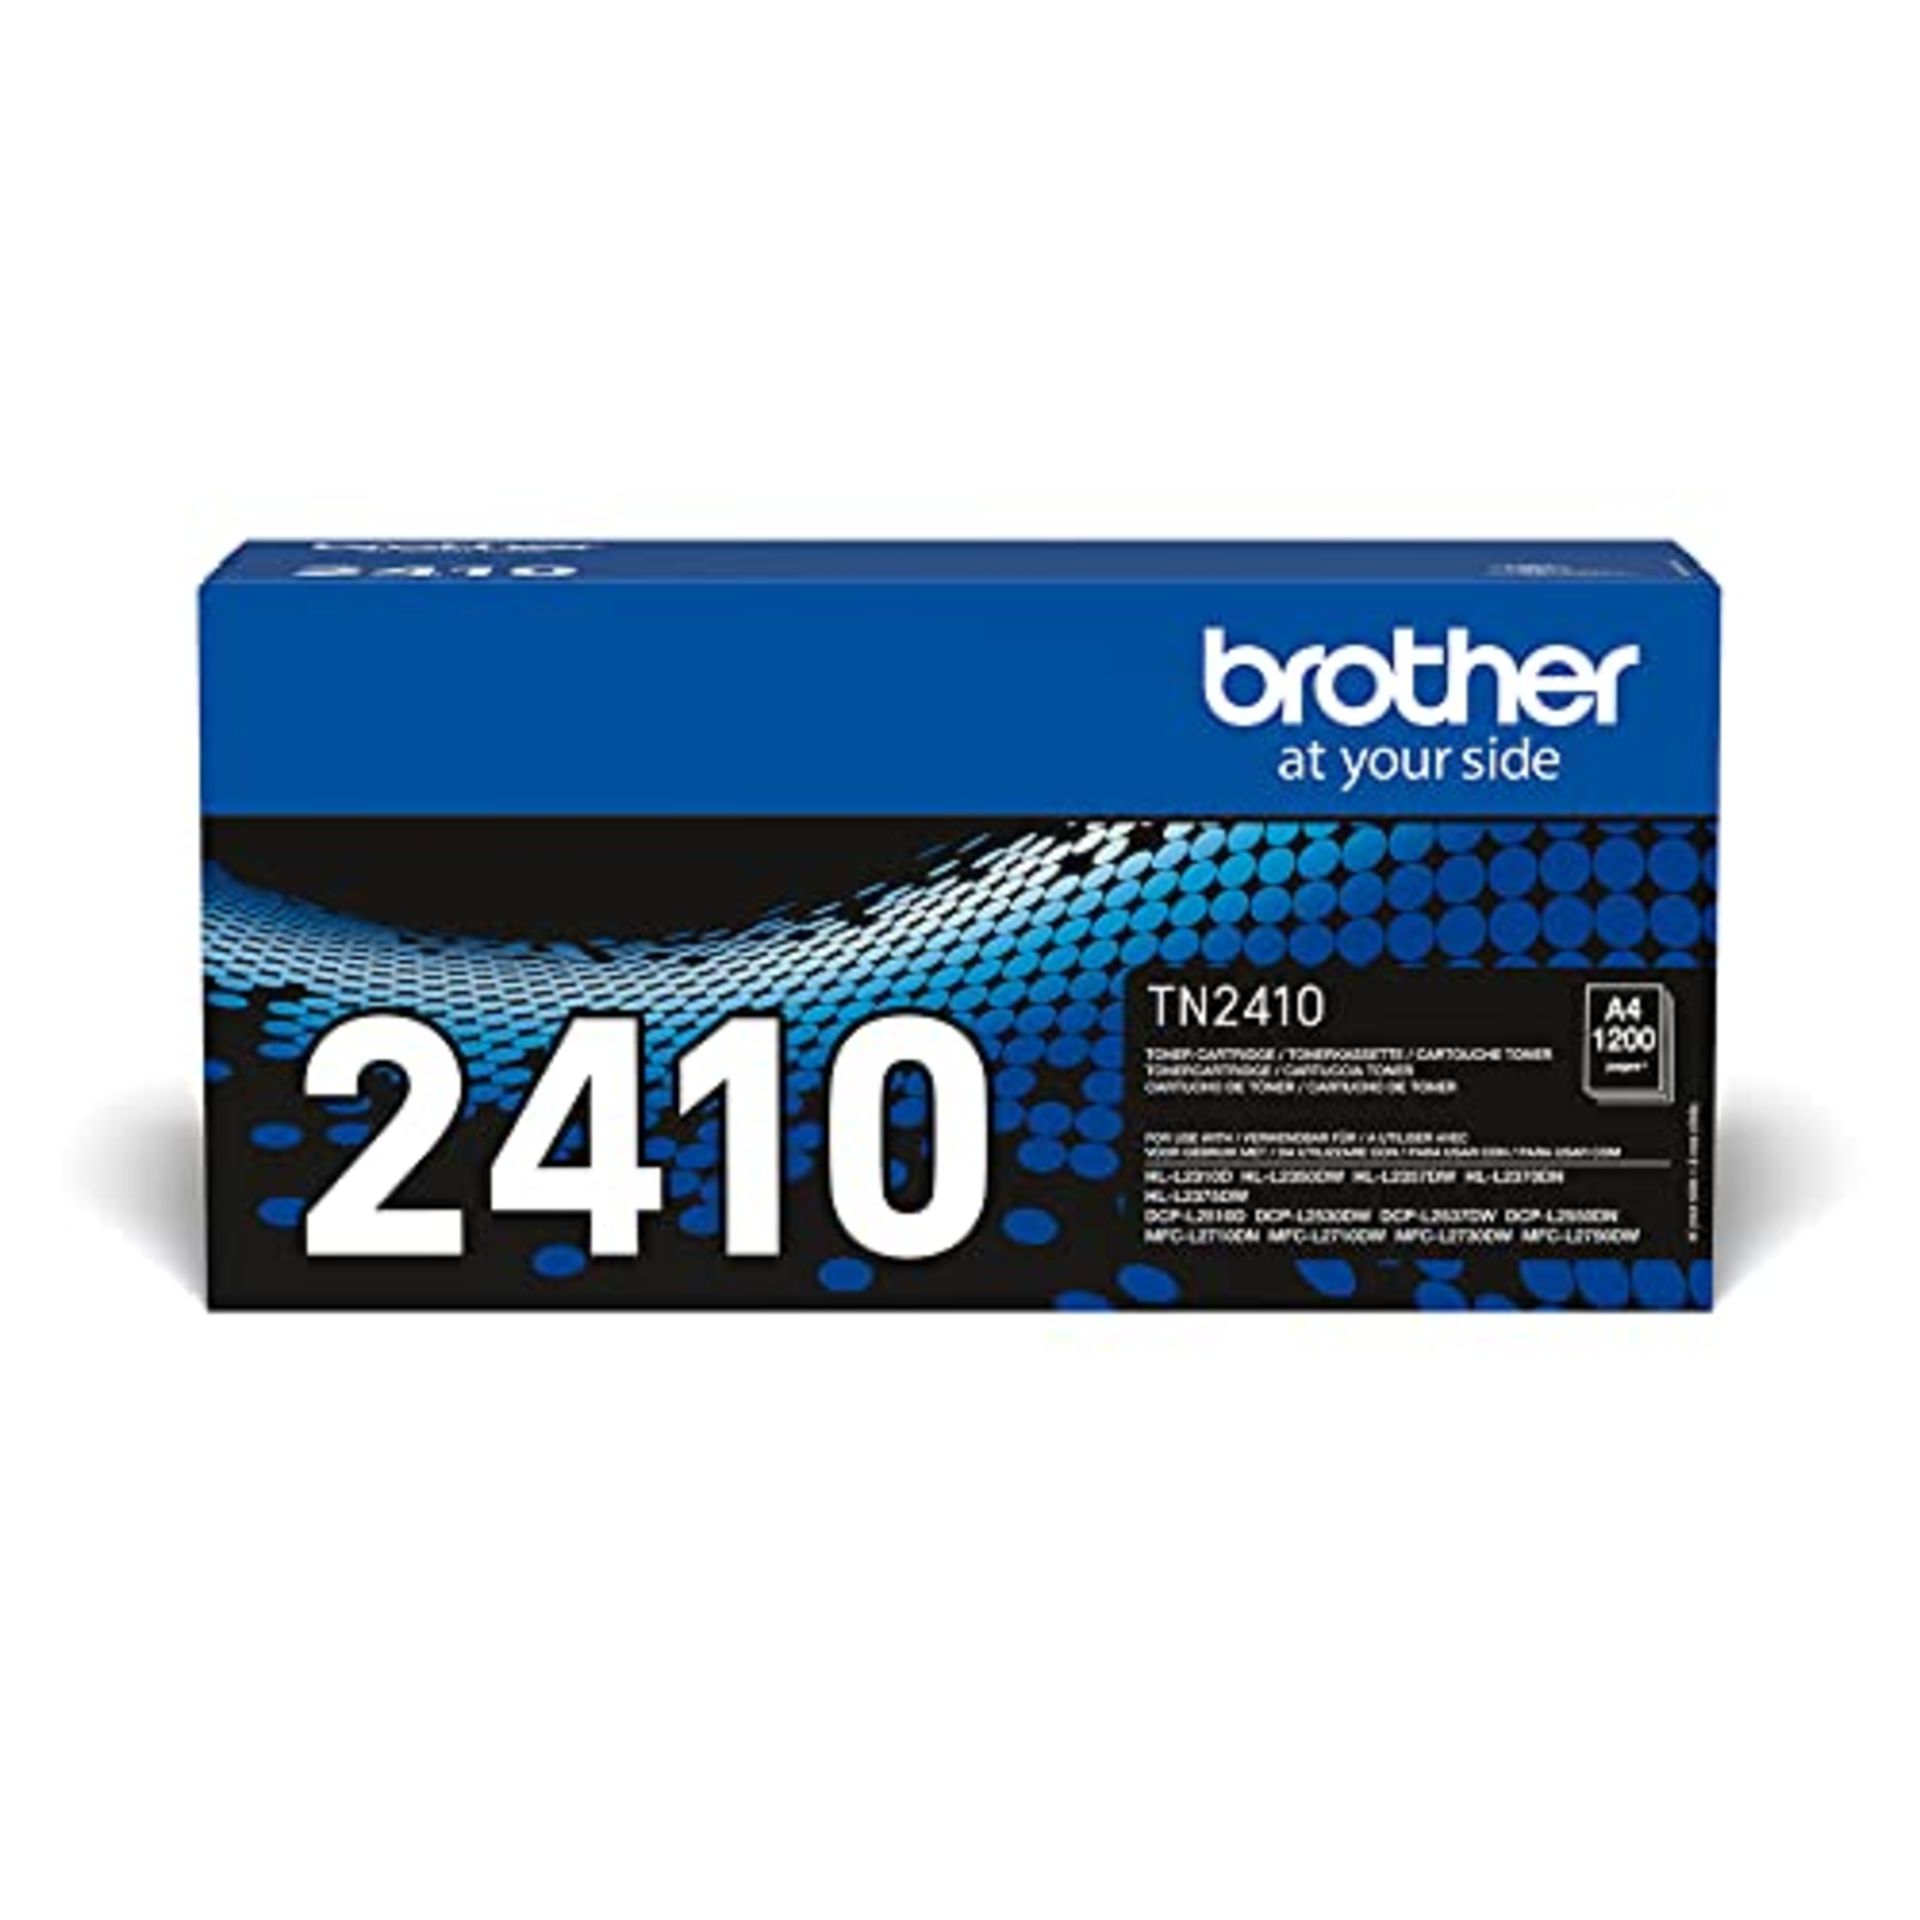 Brother TN-2410 Toner Cartridge, Black, Single Pack, Standard Yield, Includes 1 x Tone